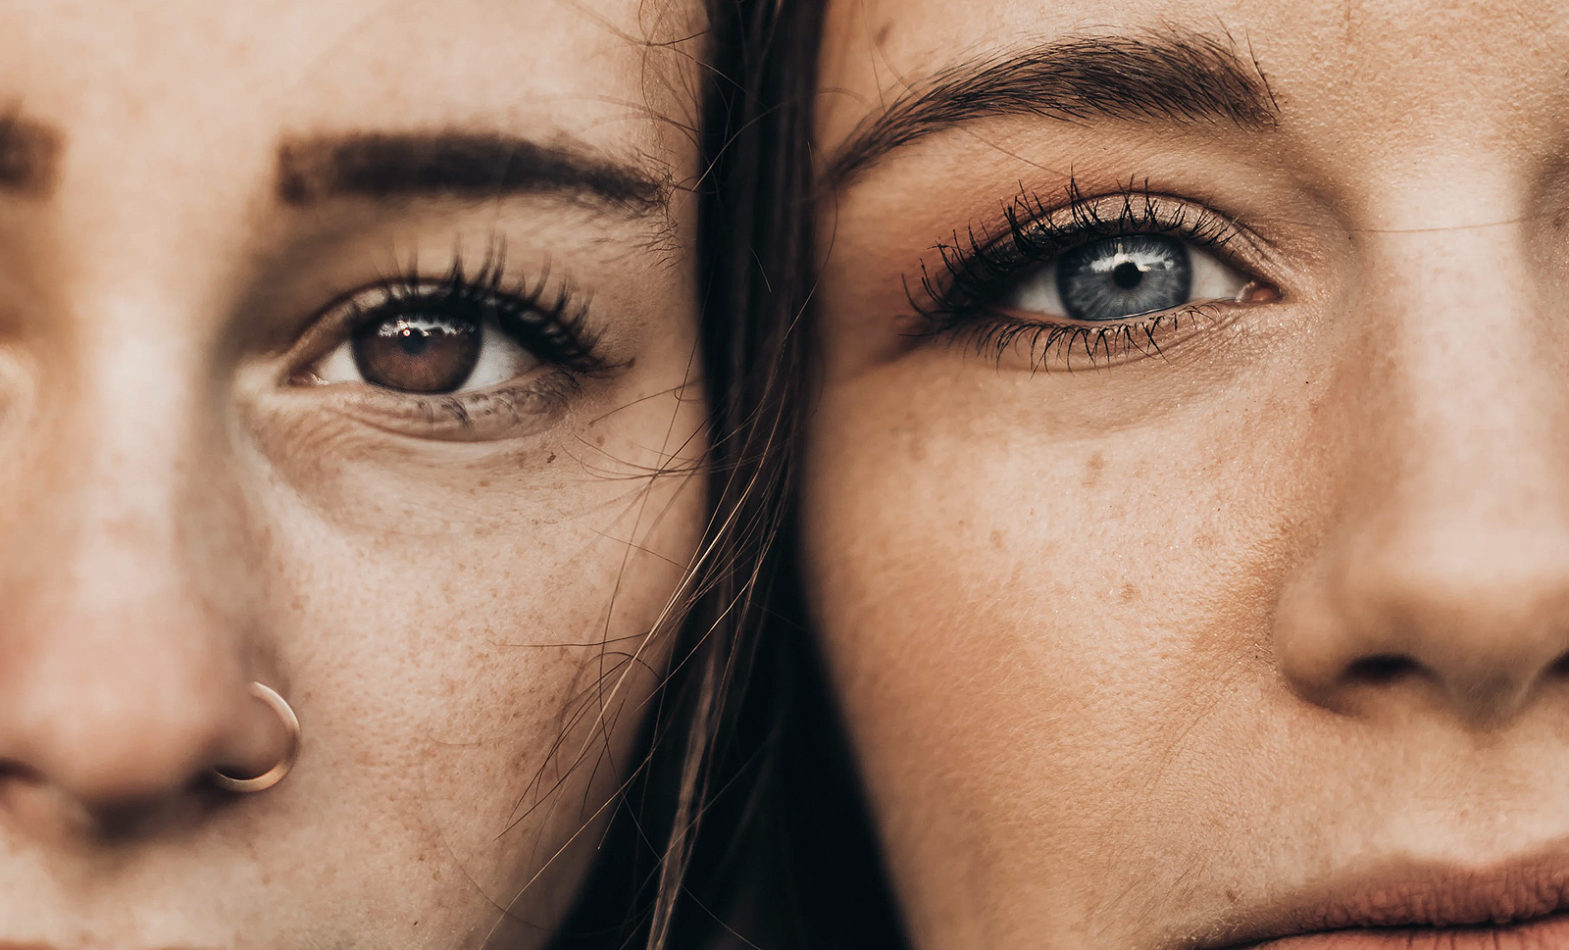 Two women’s face side by side